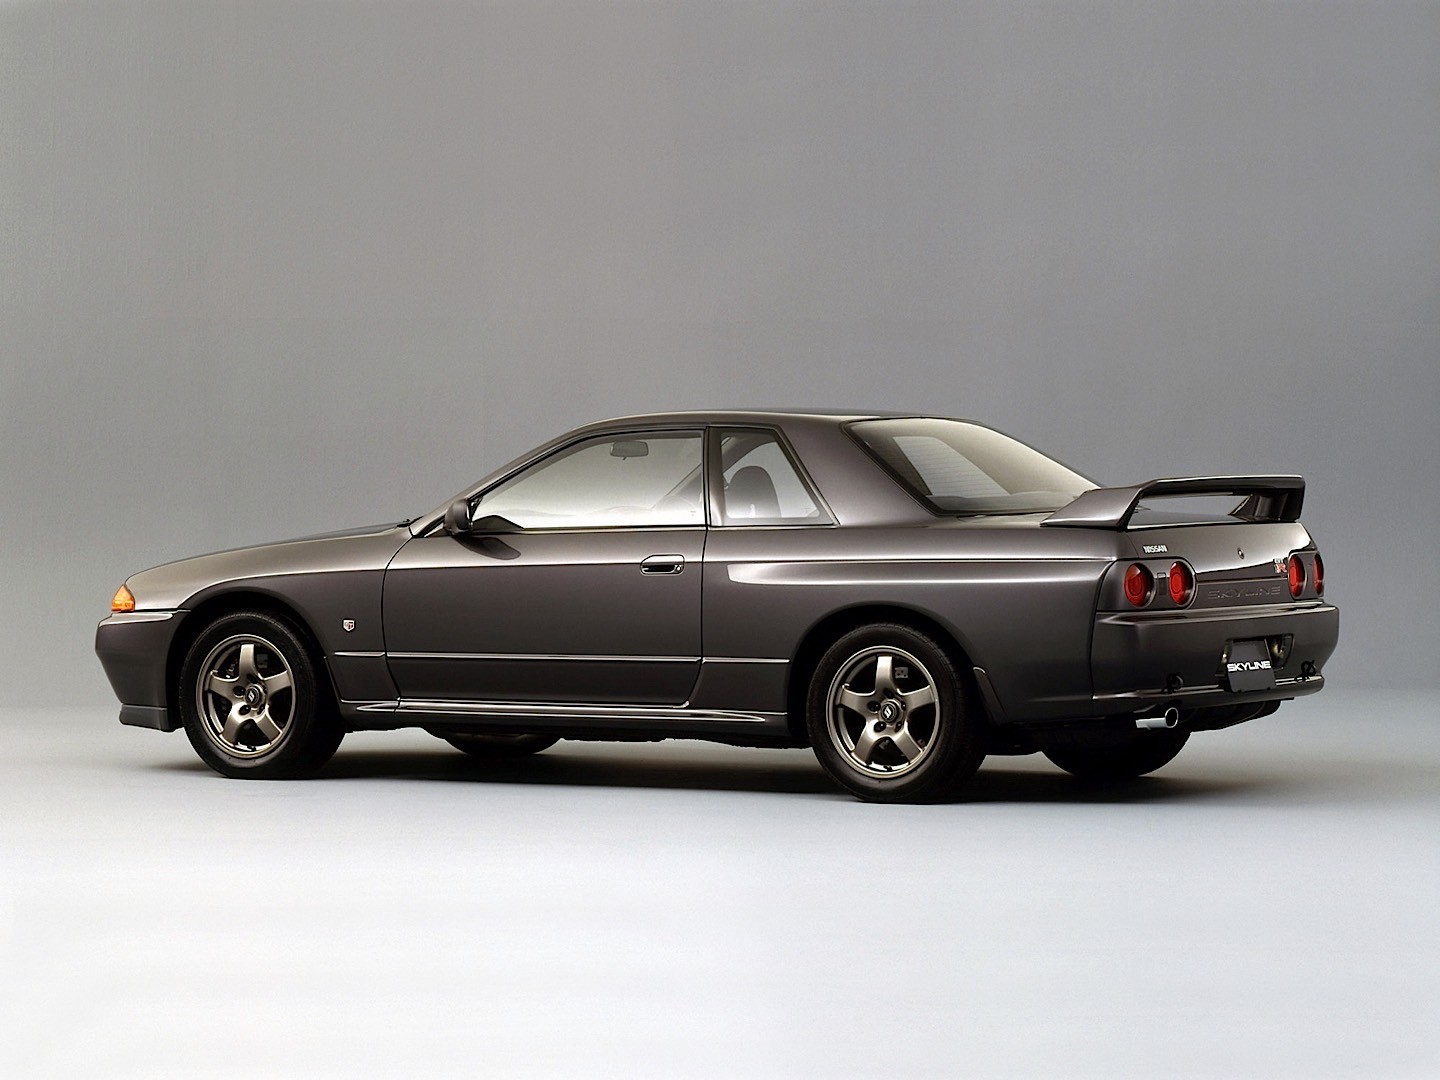 1994 Nissan skyline gtr review #3